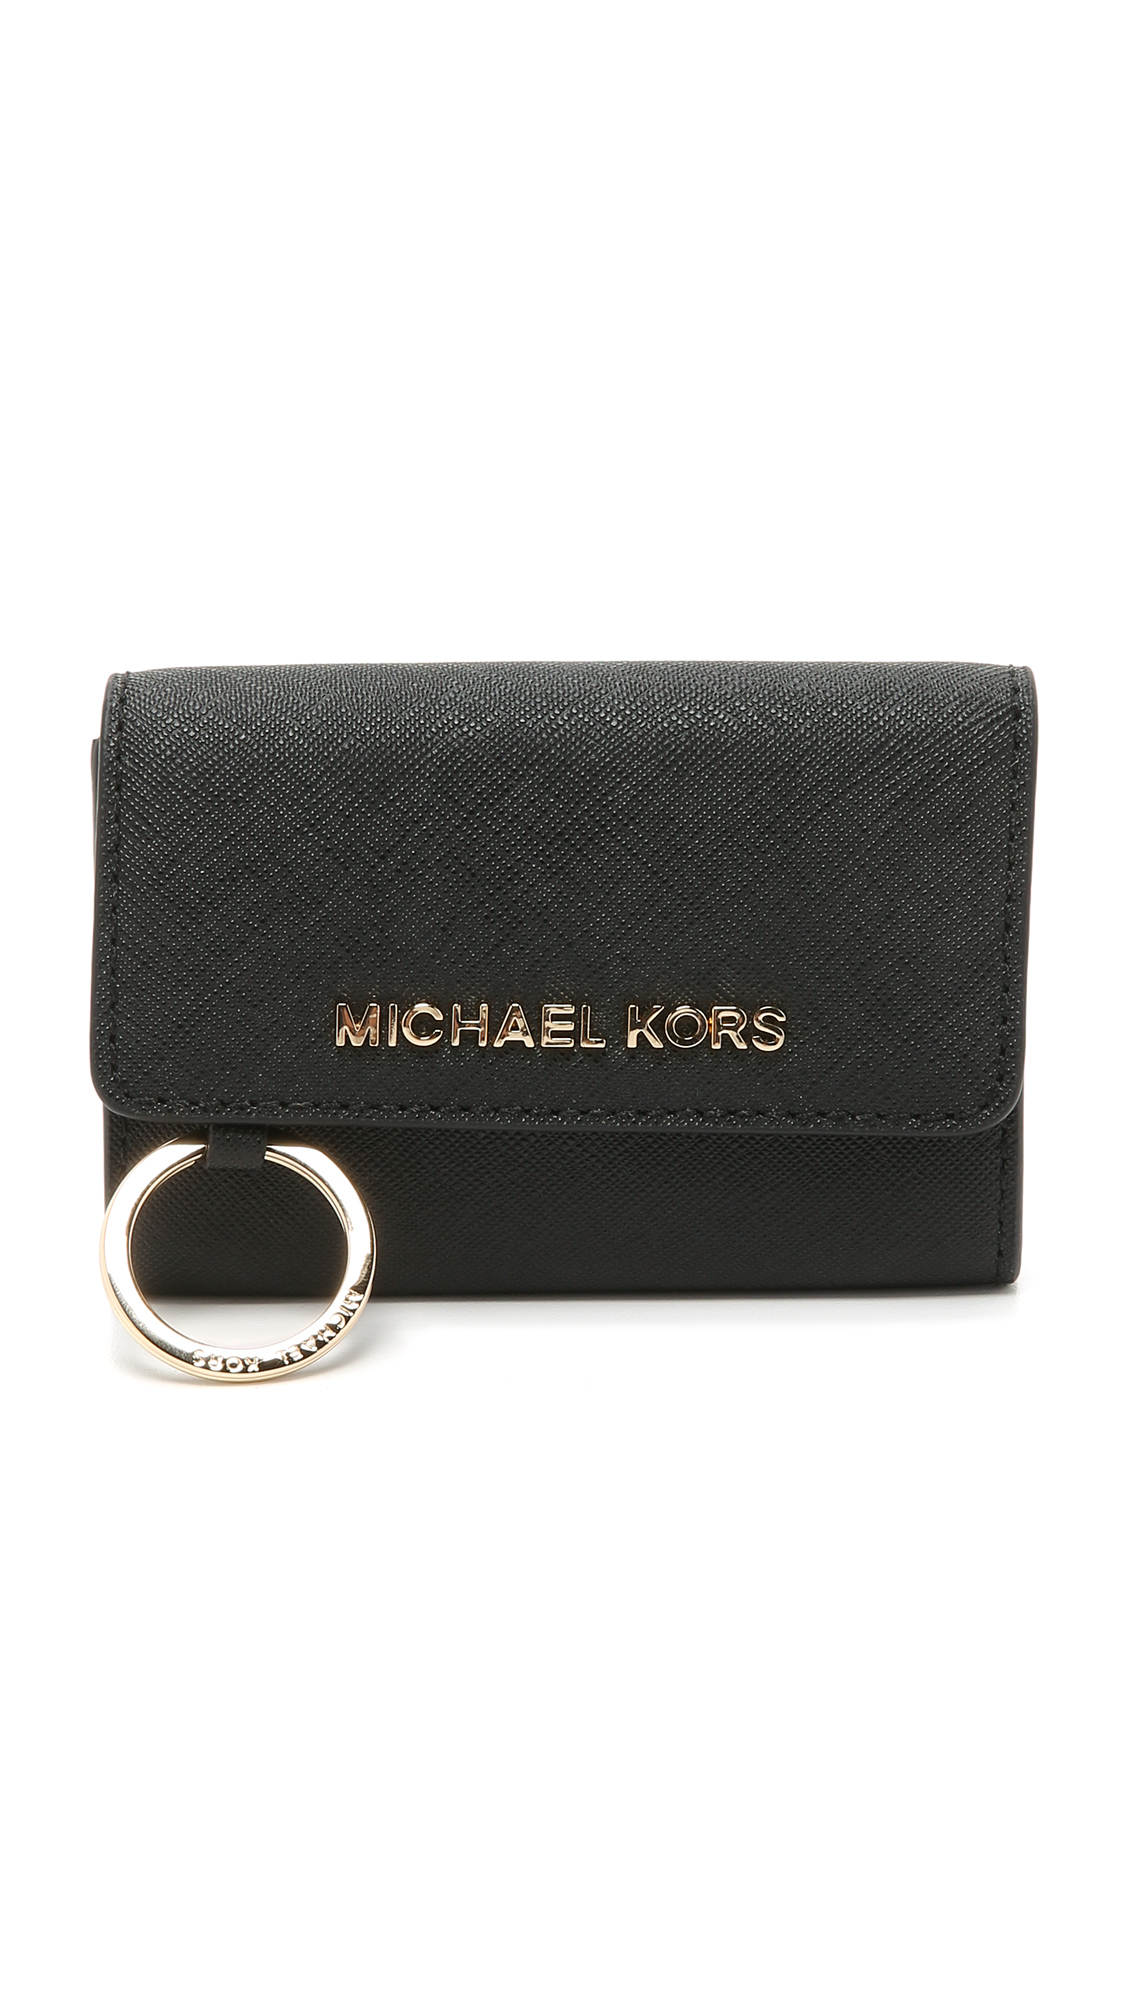 michael kors black coin purse